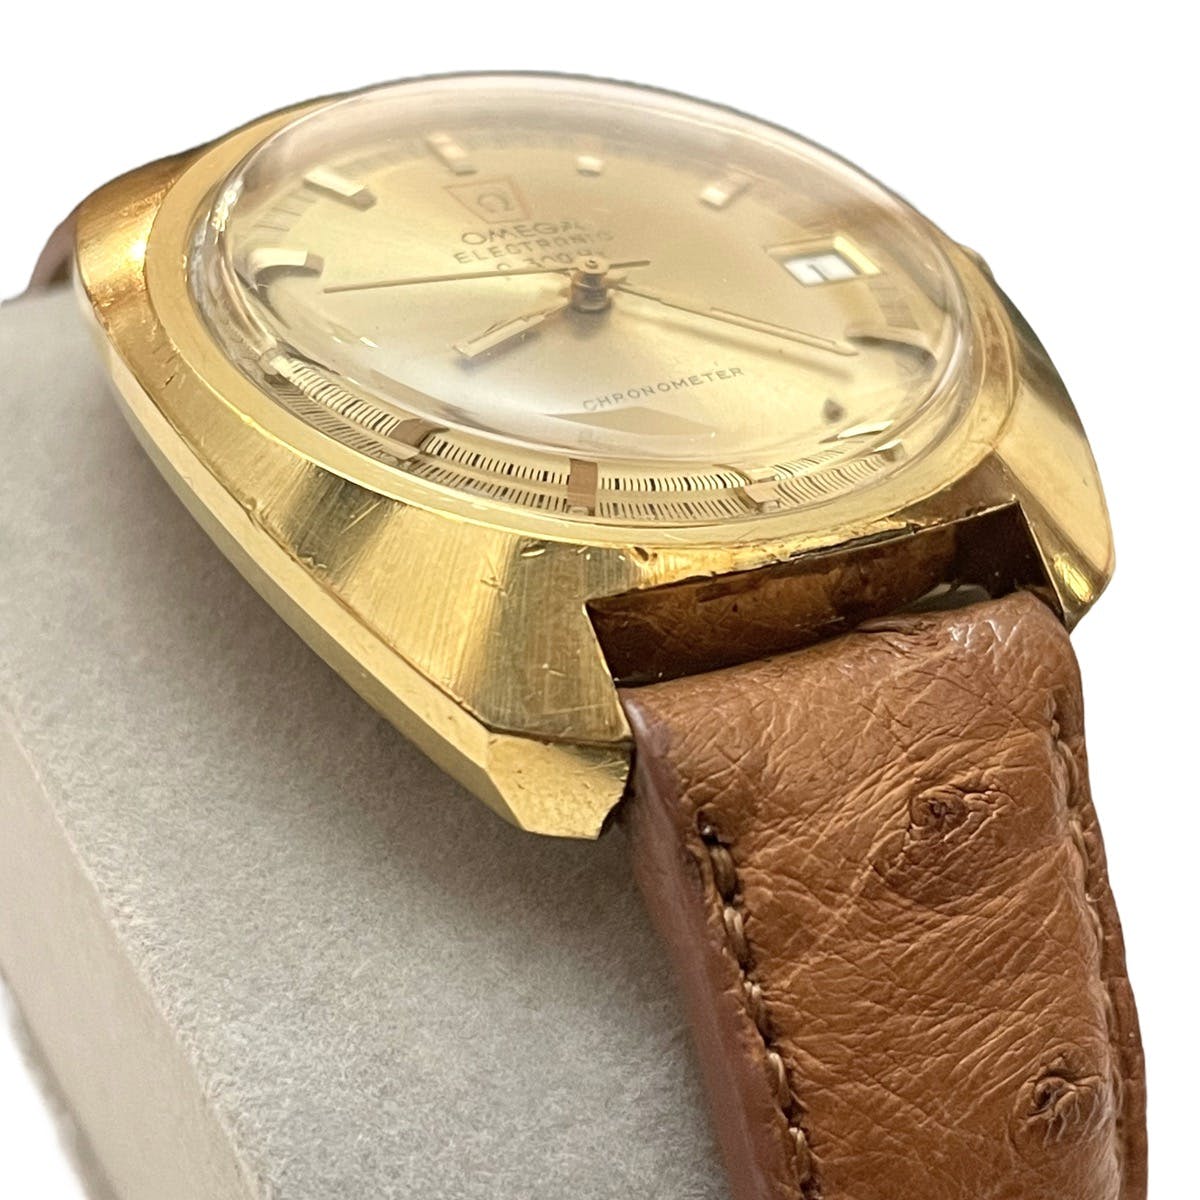 Omega - Vintage 1972 Gold Geneve Electronic Chronometer Watch - 3